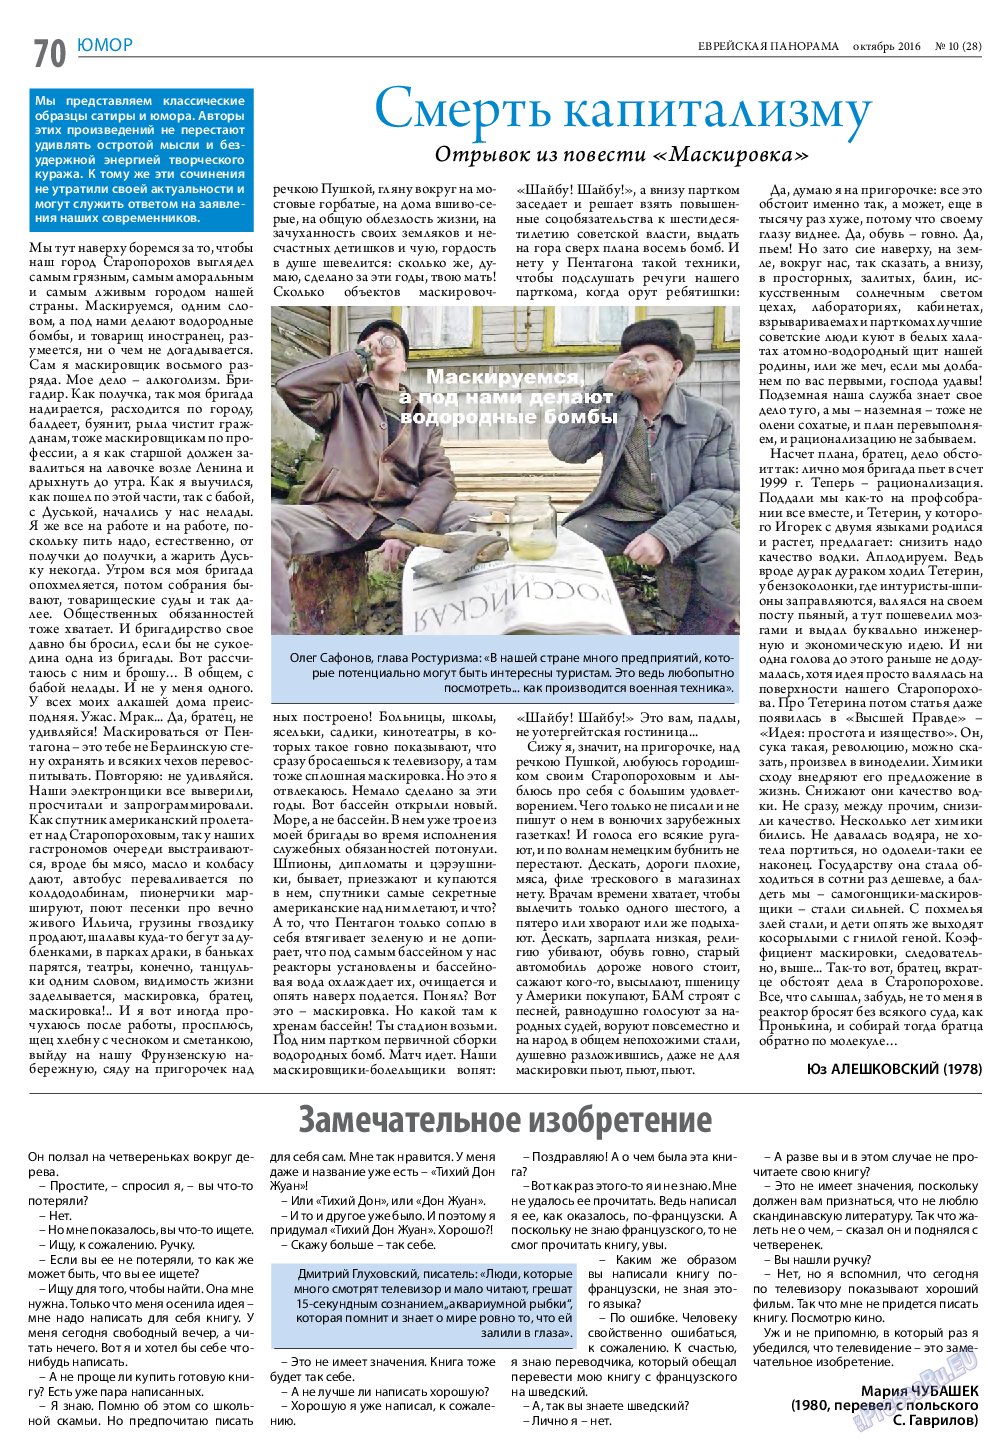 Еврейская панорама, газета. 2016 №10 стр.70